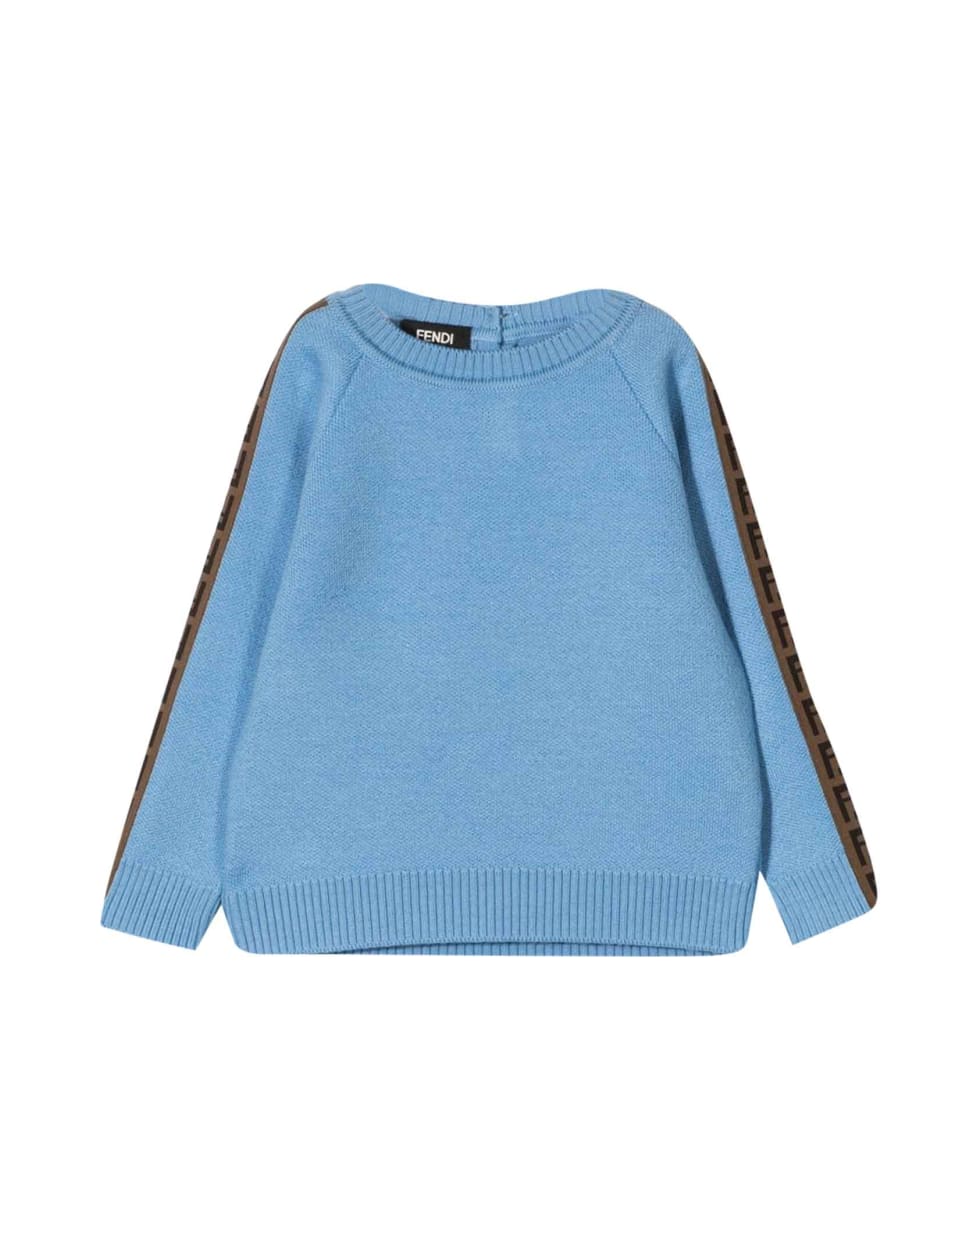 Fendi Unisex Light Blue Sweater - Azzurro